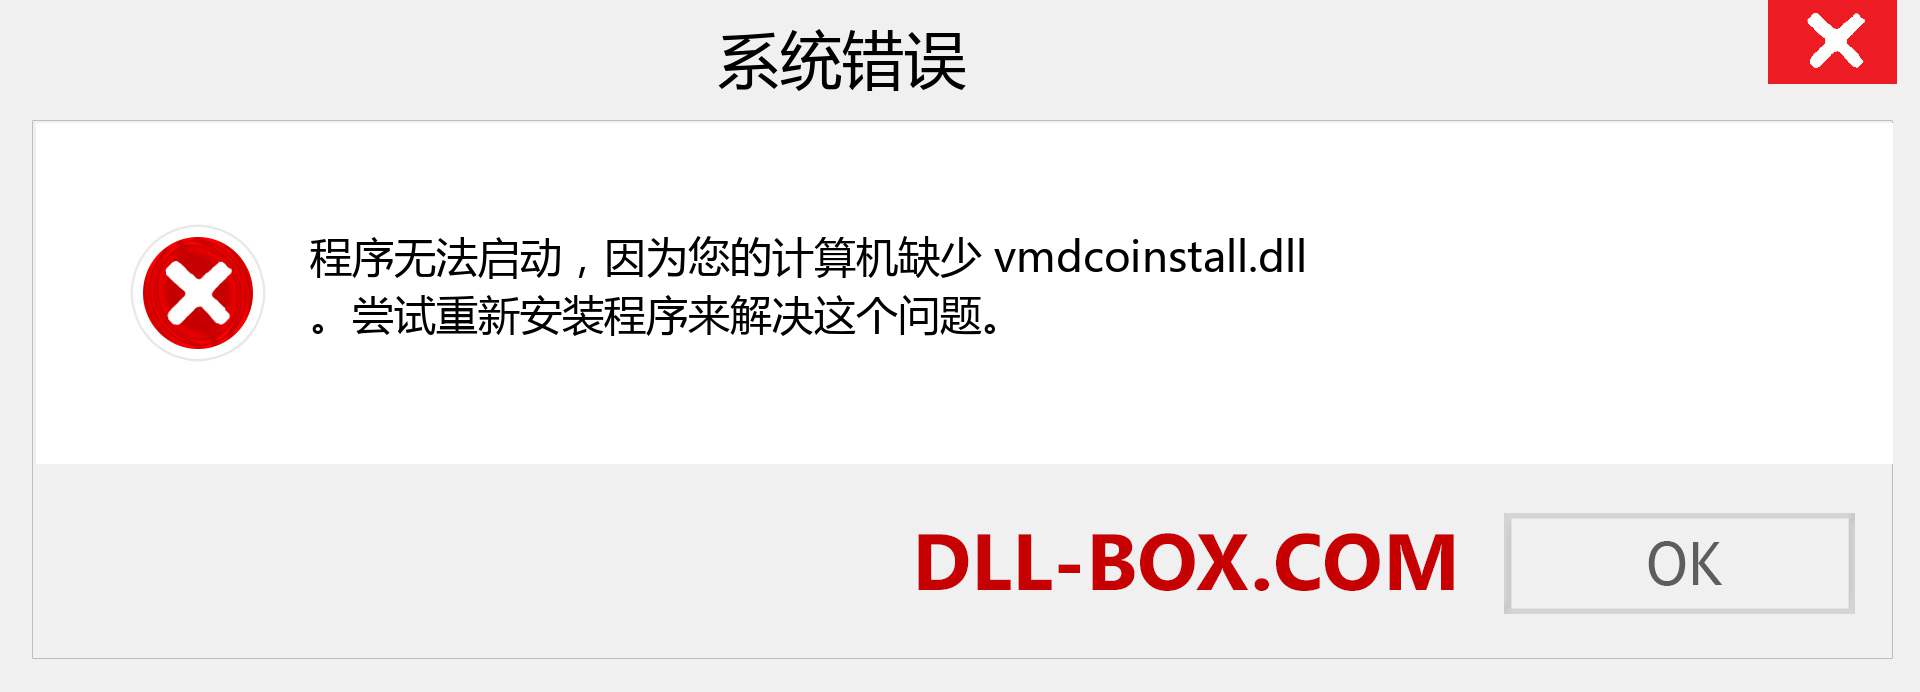 vmdcoinstall.dll 文件丢失？。 适用于 Windows 7、8、10 的下载 - 修复 Windows、照片、图像上的 vmdcoinstall dll 丢失错误